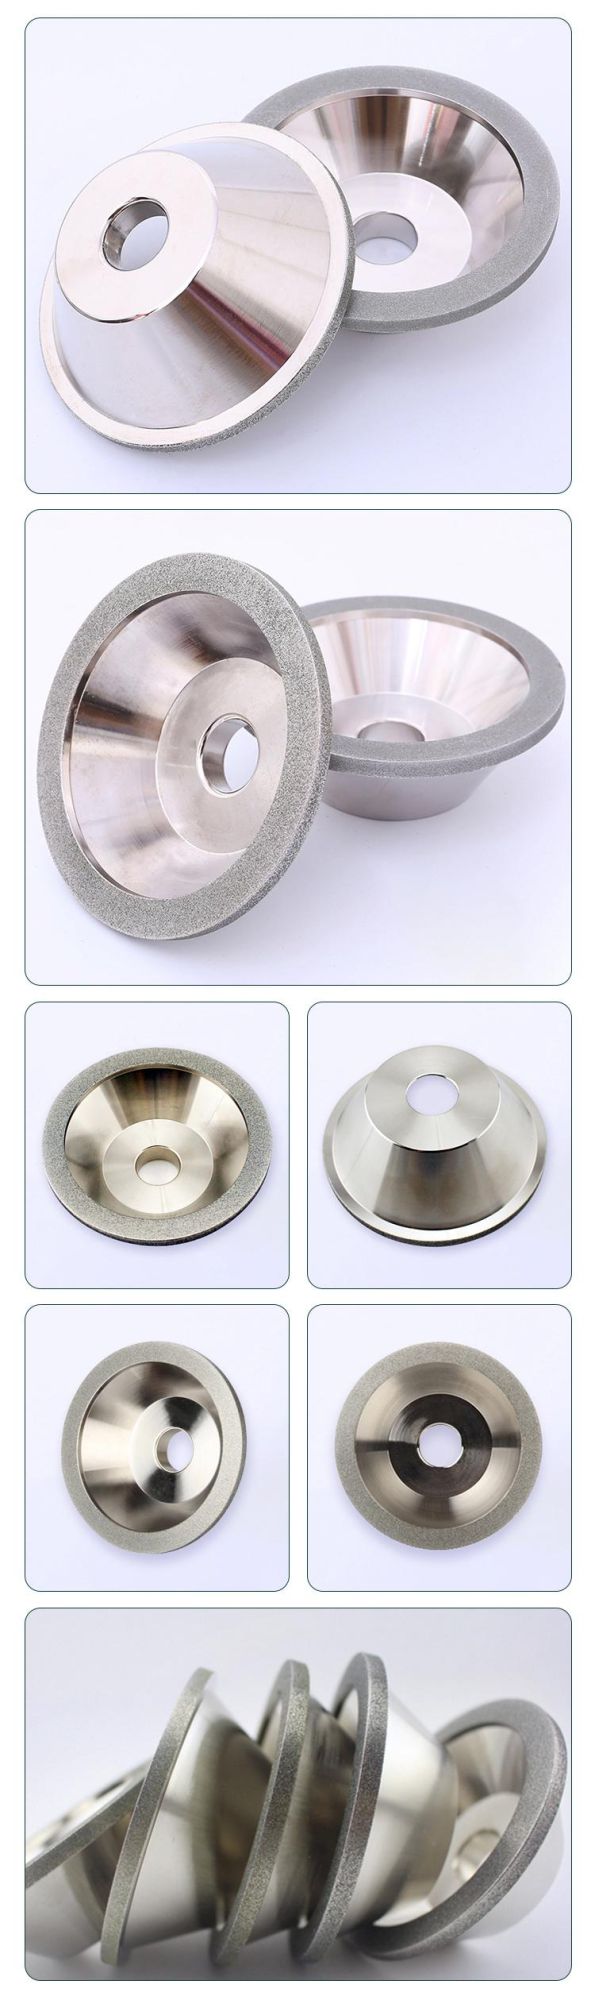 Bowl Coated Grinding Wheel Electroplated Bond Diamond Grinding Wheel